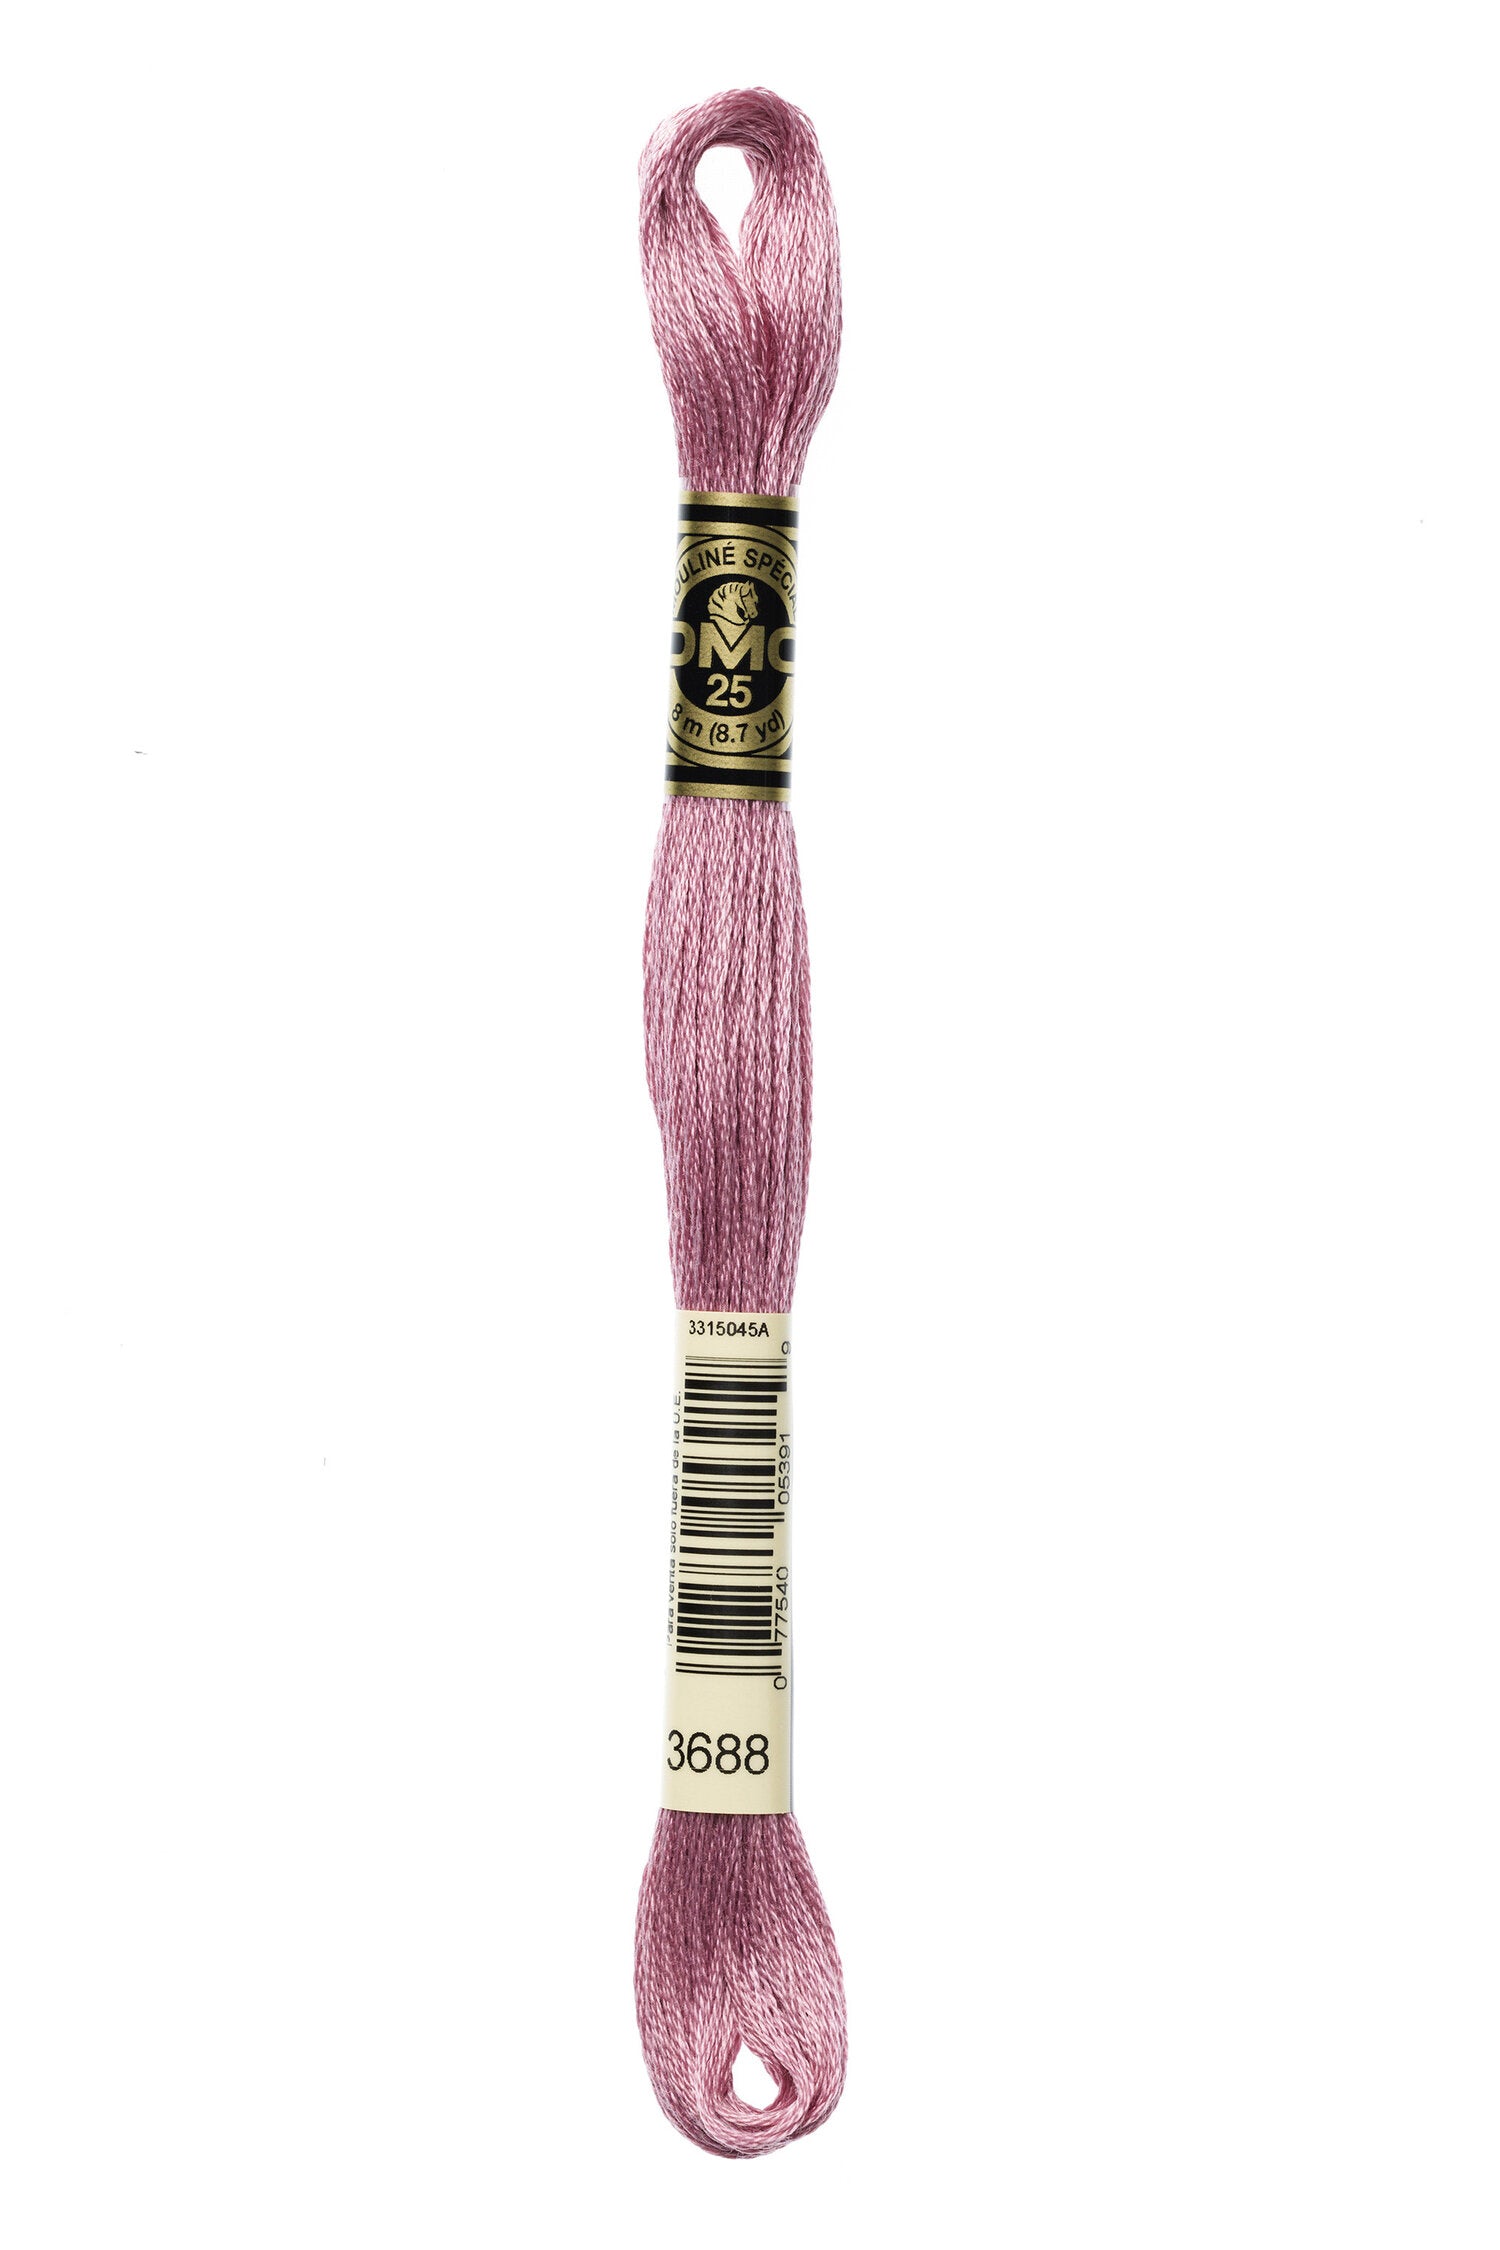 DMC 3688 - Mauve - Medium - DMC 6 Strand Embroidery Thread, Thread & Floss, Thread & Floss, The Crafty Grimalkin - A Cross Stitch Store